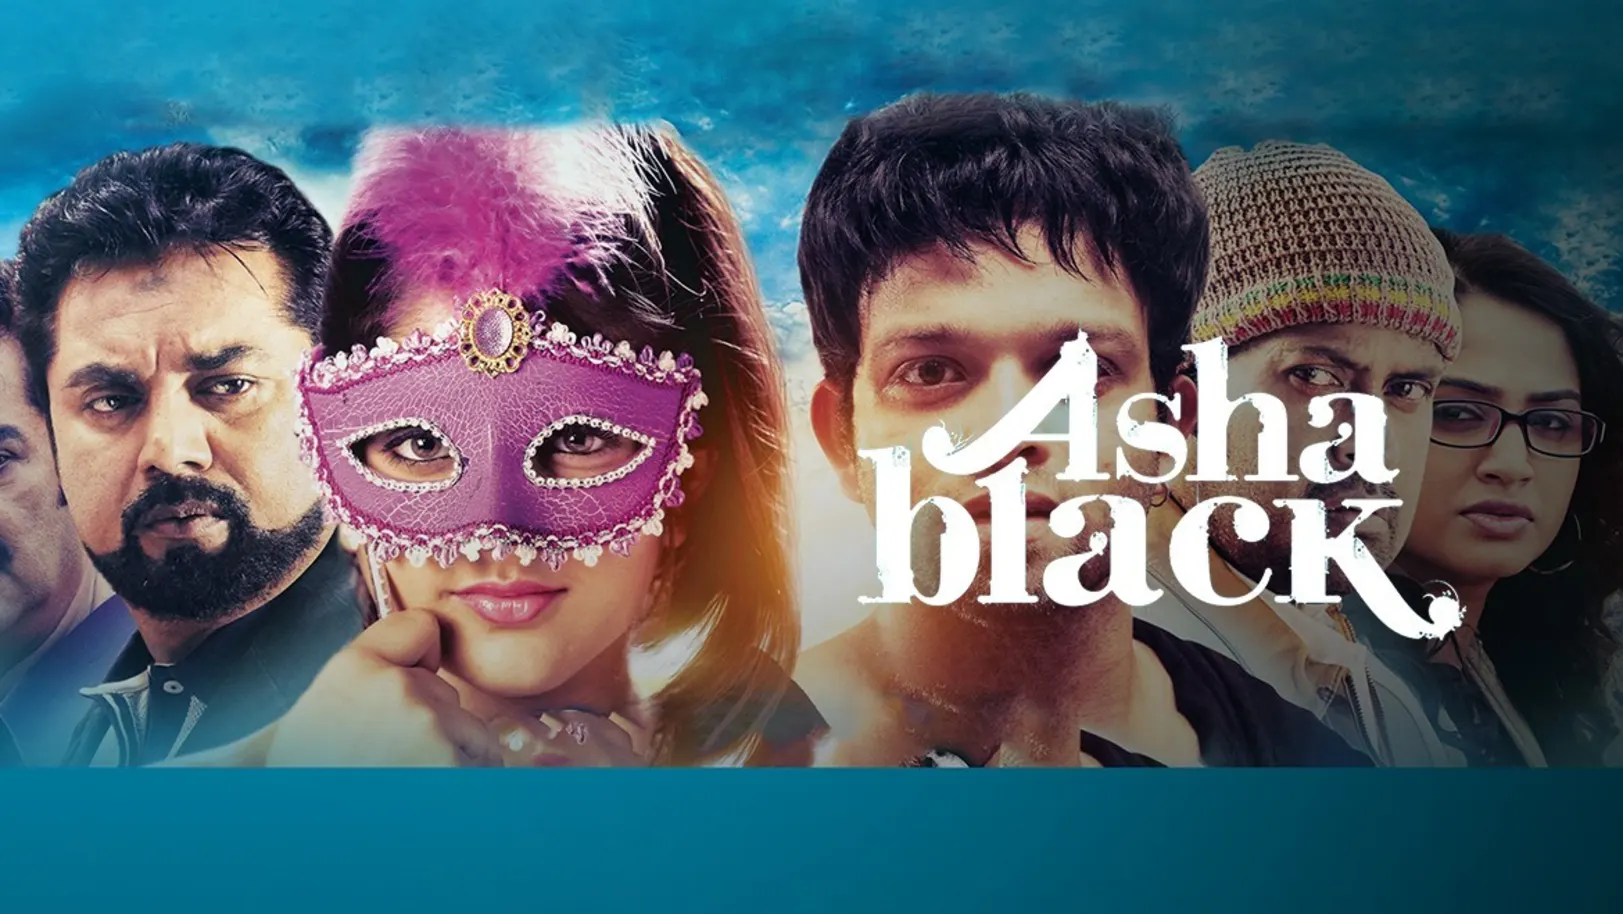 Asha Black Movie